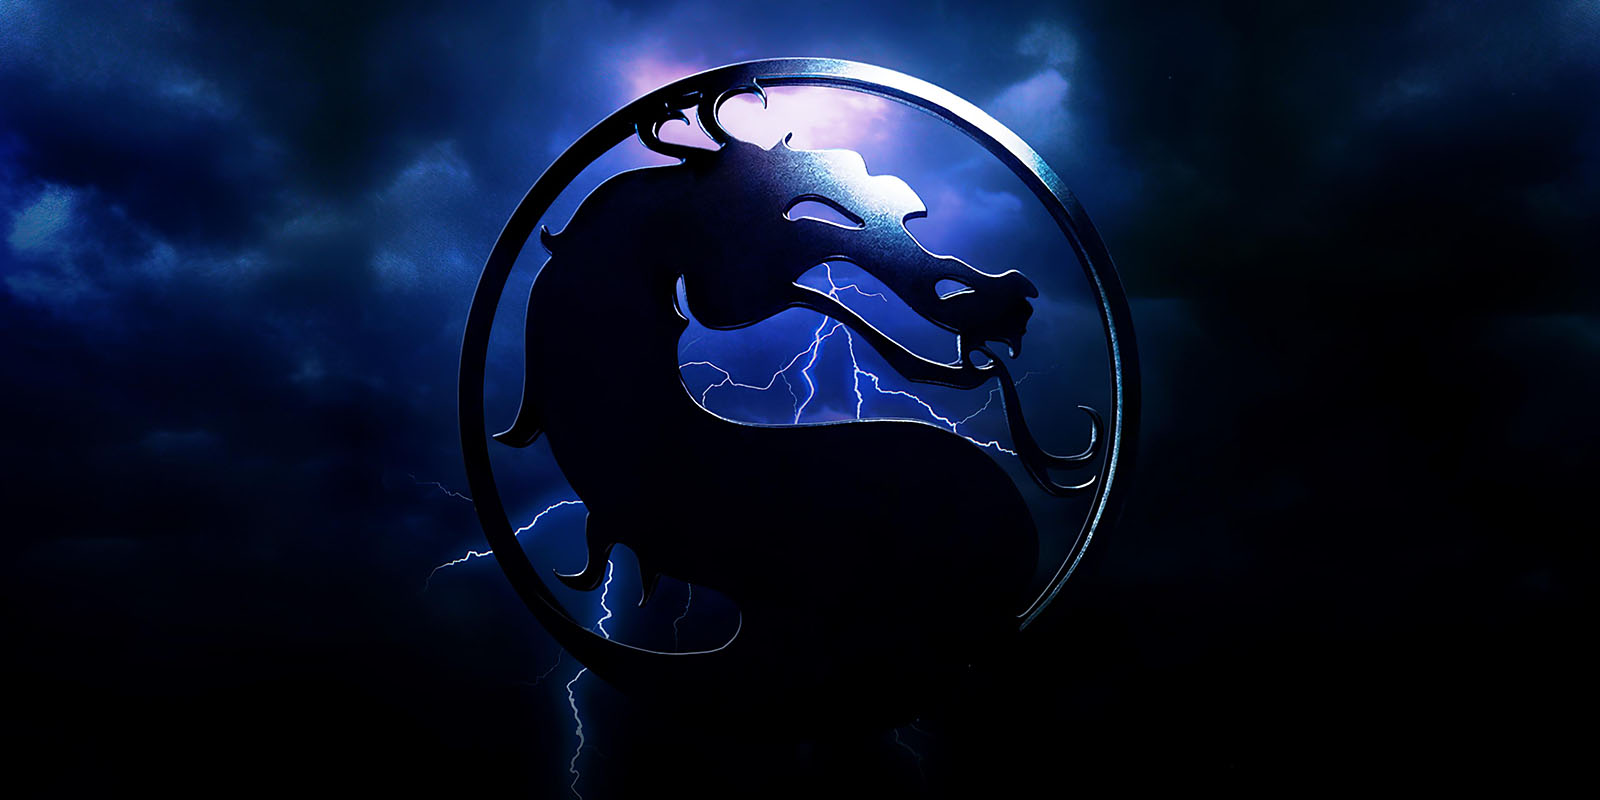 Mortal Kombat 2 source code leak reveals many cut or unused